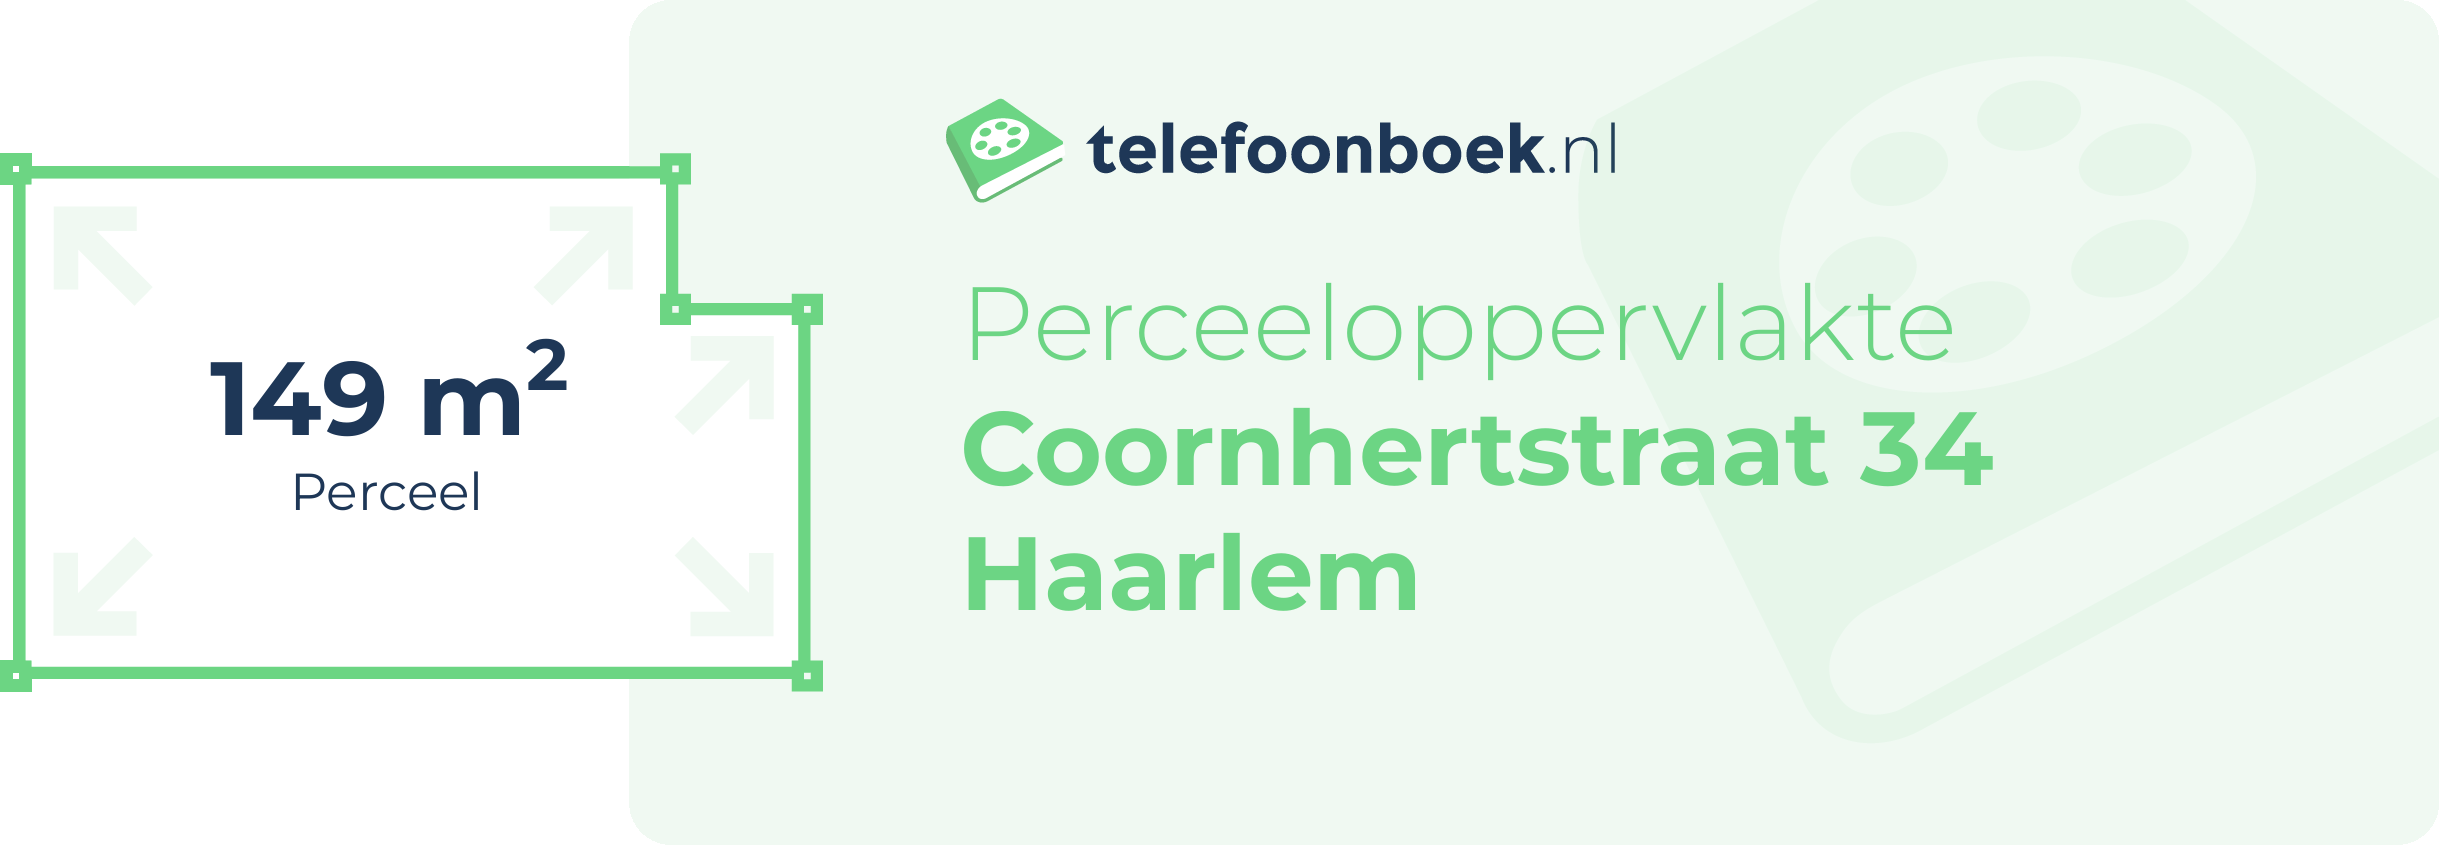 Perceeloppervlakte Coornhertstraat 34 Haarlem